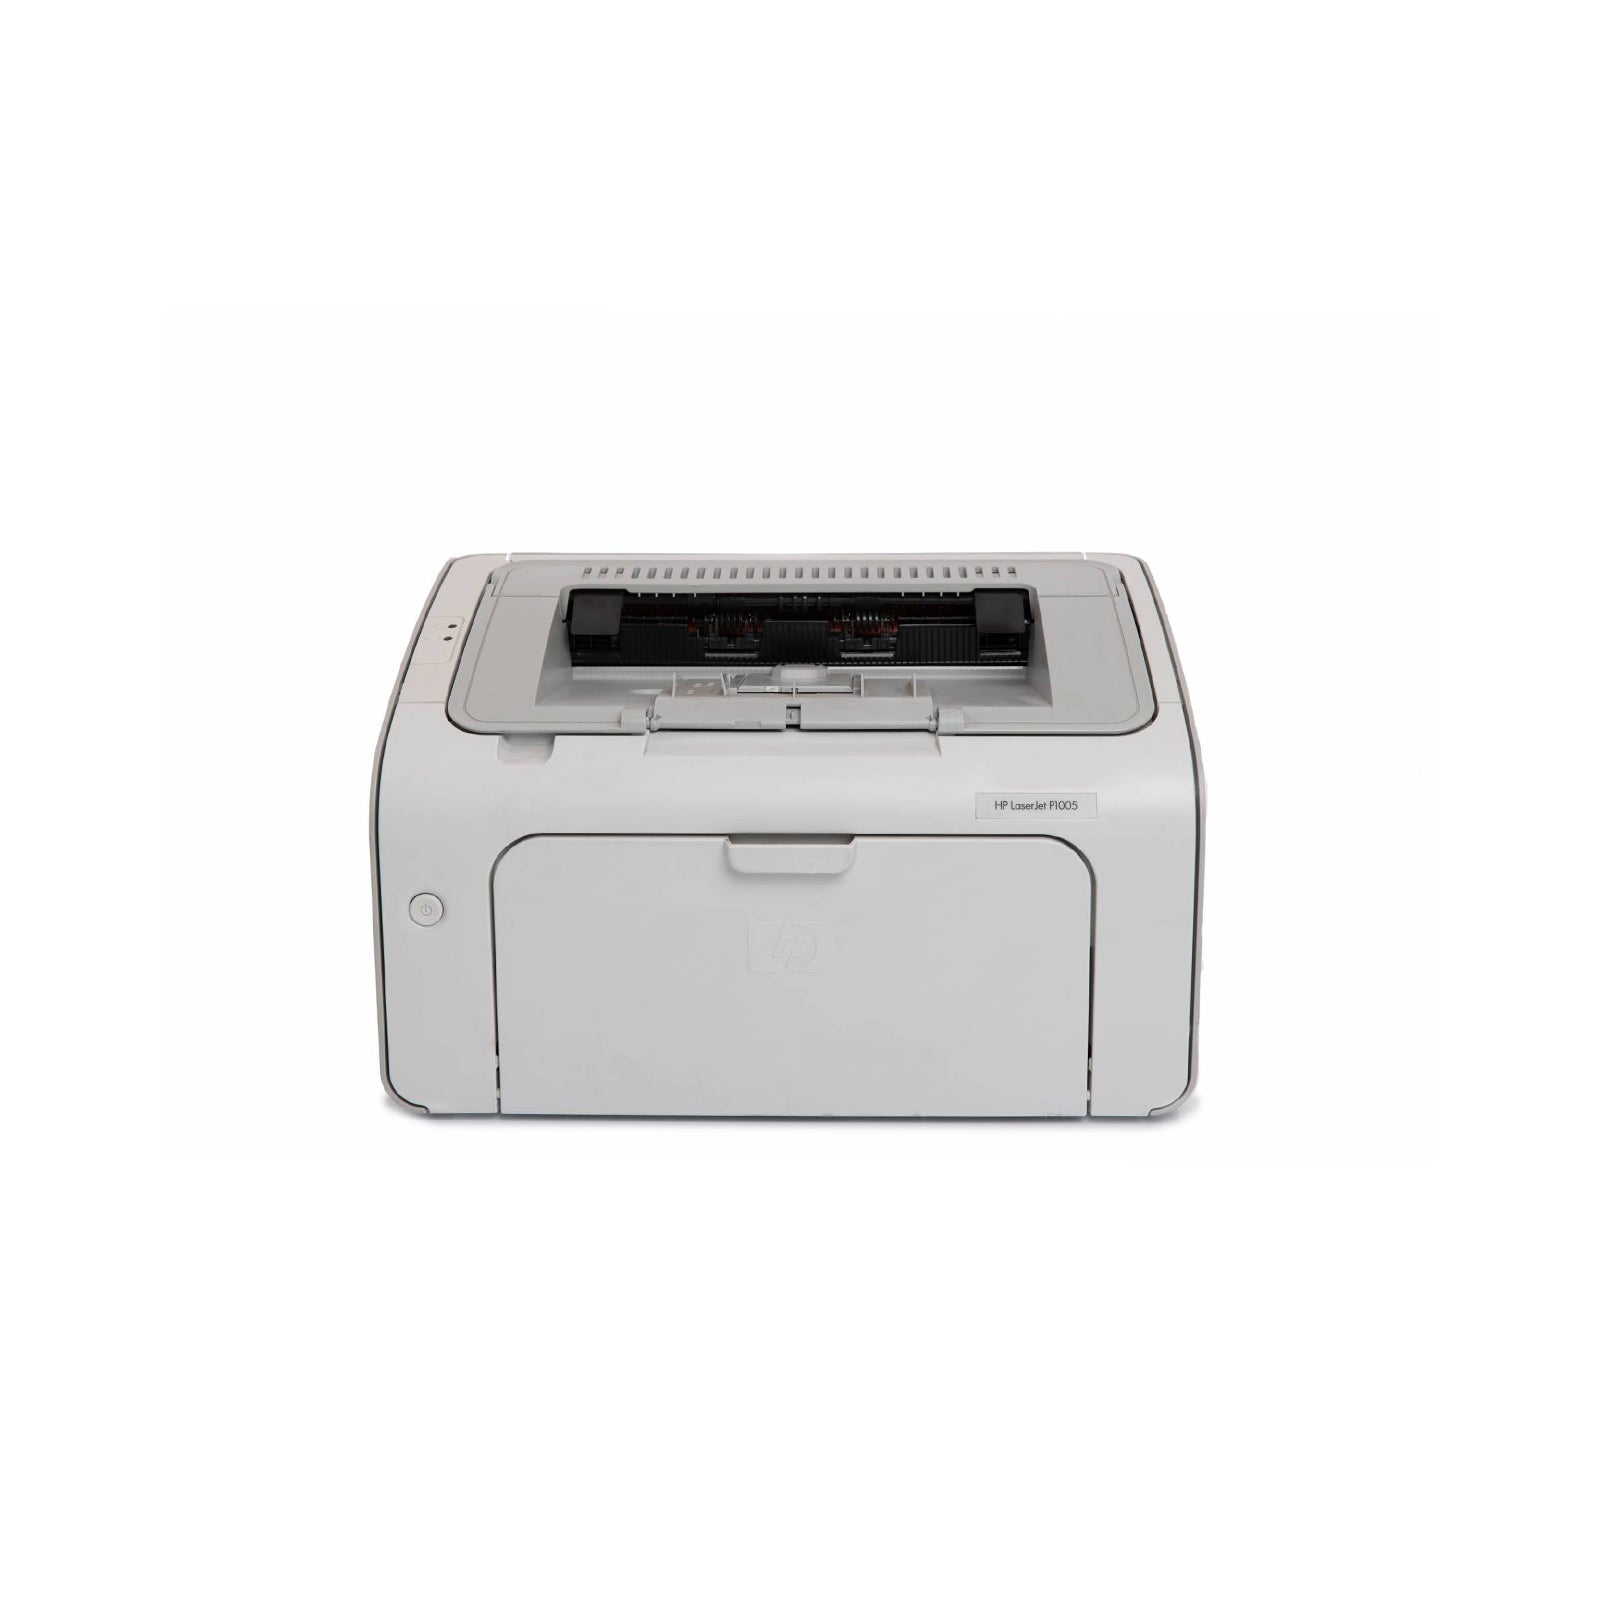 HP LaserJet Pro p1005 Printer CB410A Refurbished